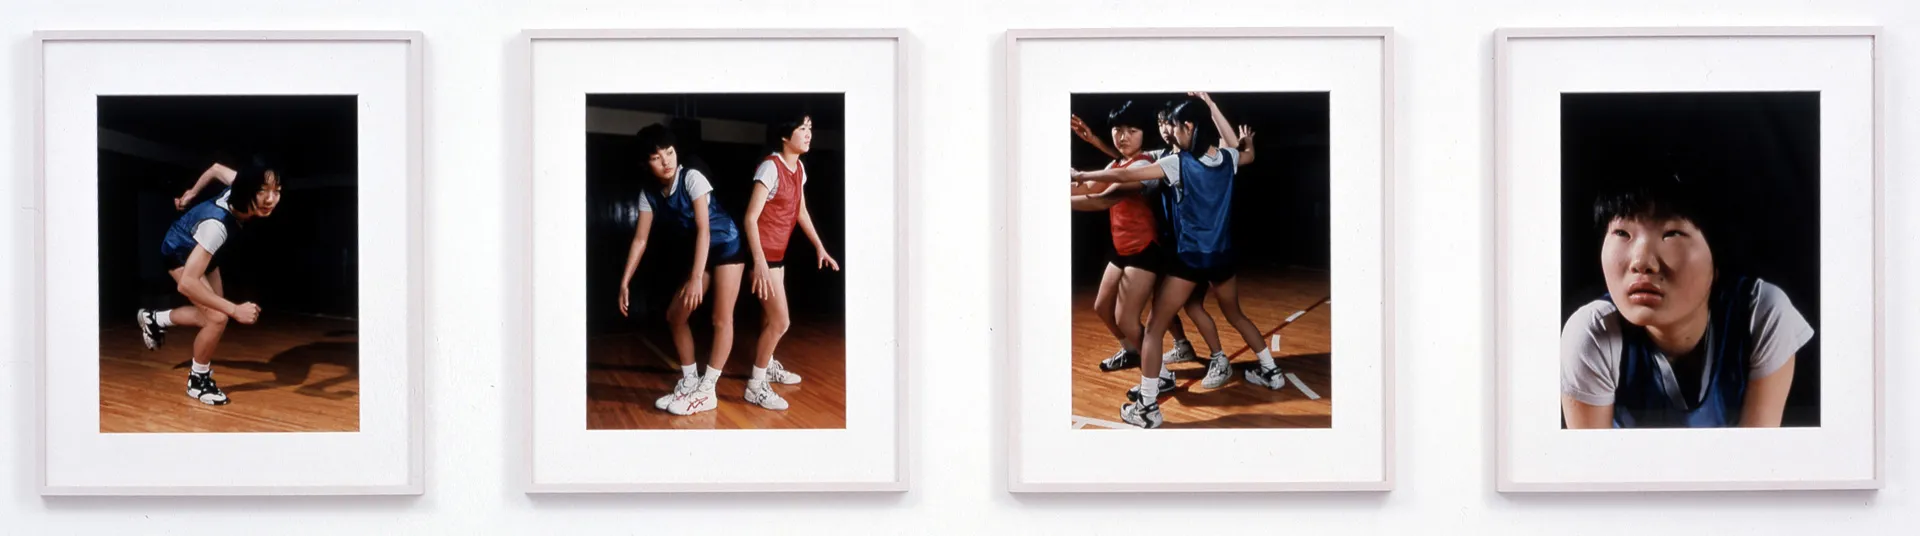 Sharon Lockhart - Goshogaoka Girls Basketball Team: Group III: (a) Chihiro Nishijima; (b) Sayaka Miyamoto &amp; Takako Yamada; (c) Kumiko Shirai &amp; Eri Hashimoto; (d) Kumiko Kotaka, 1997, four framed chromogenic prints